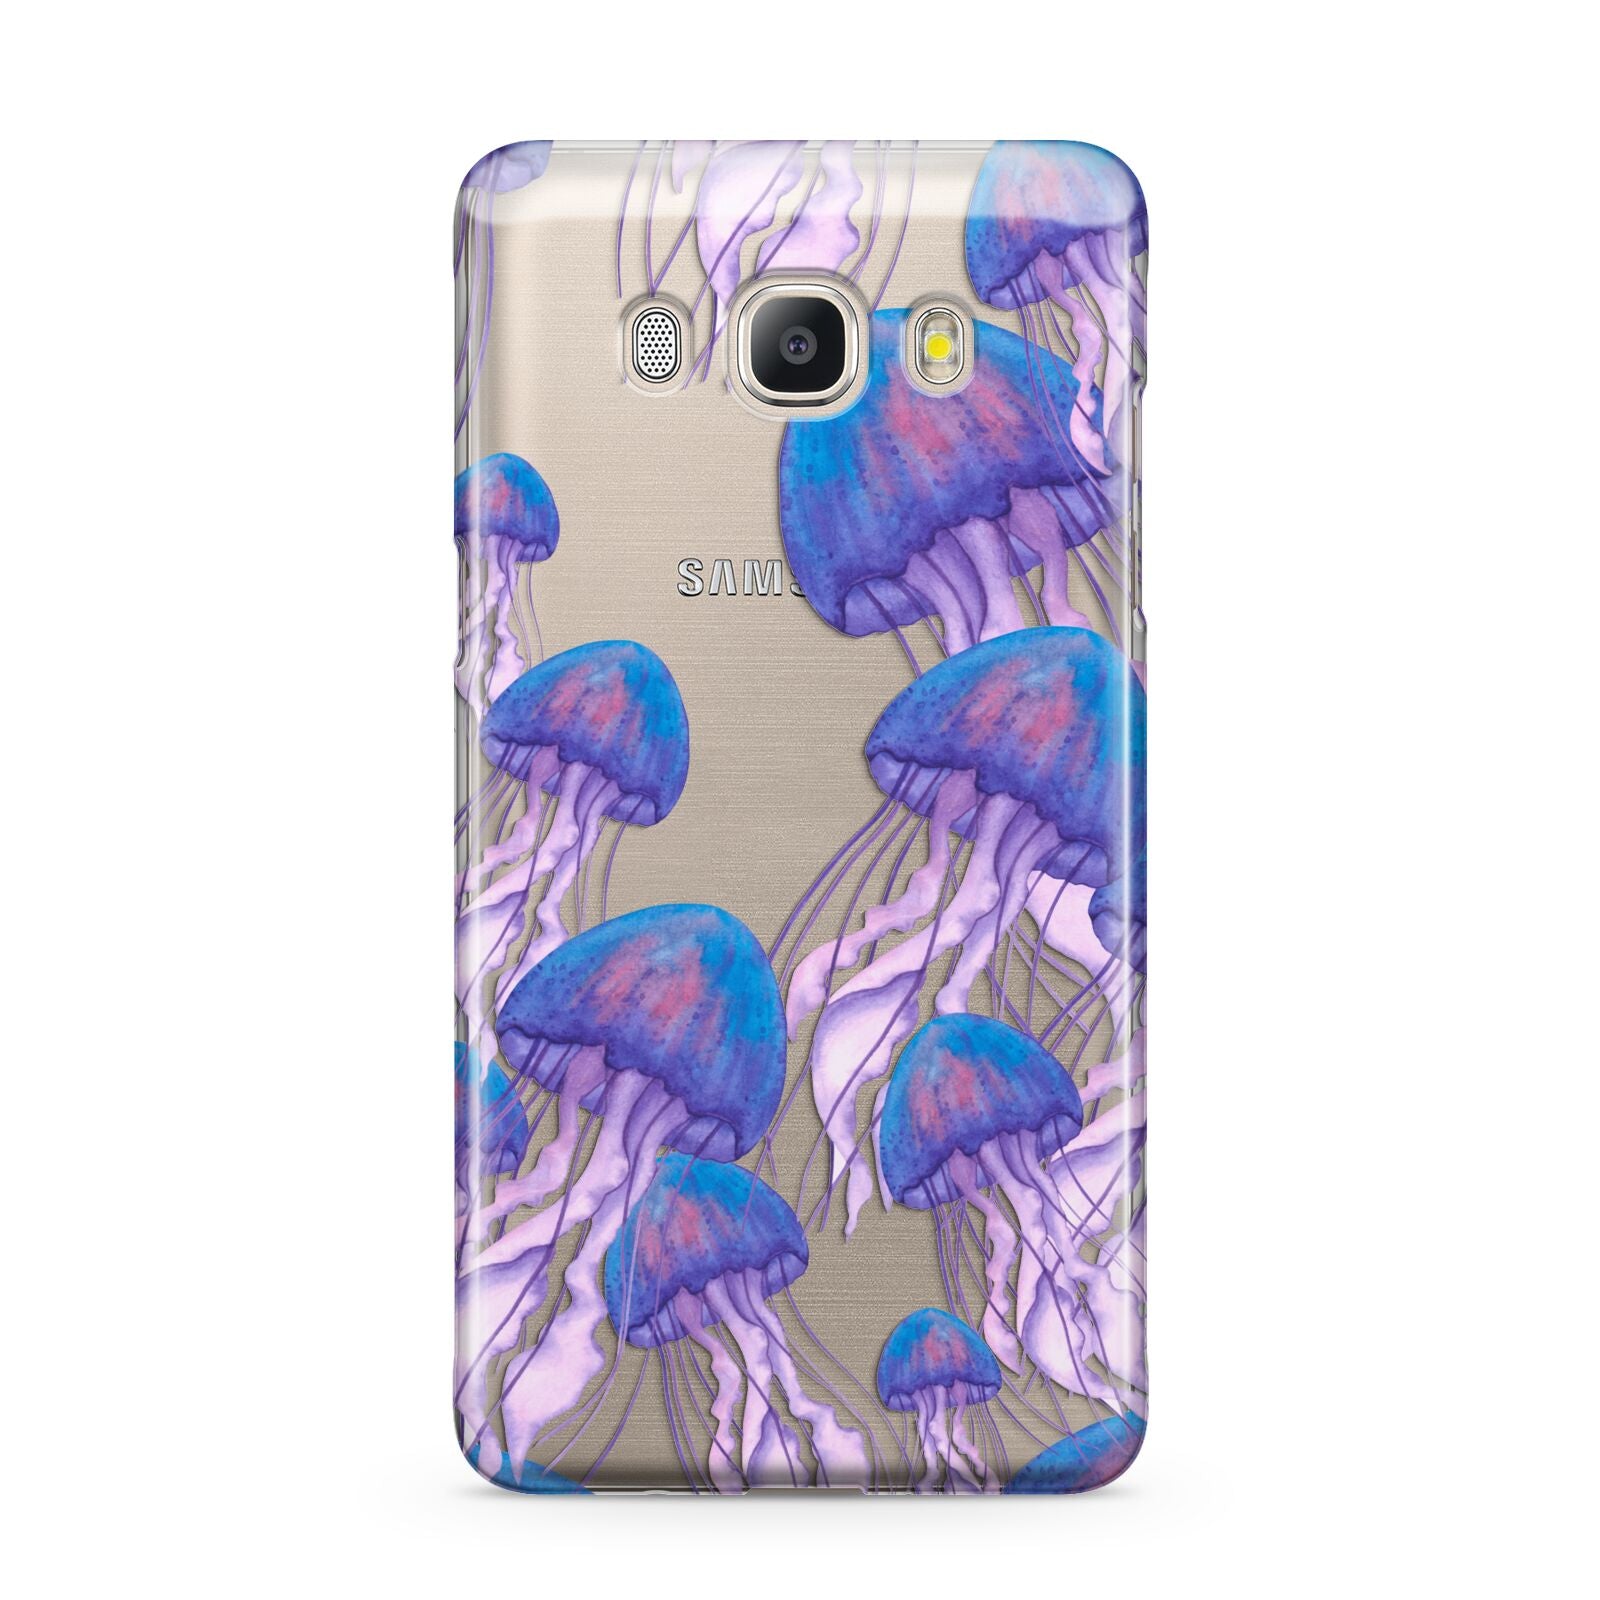 Jellyfish Samsung Galaxy J5 2016 Case